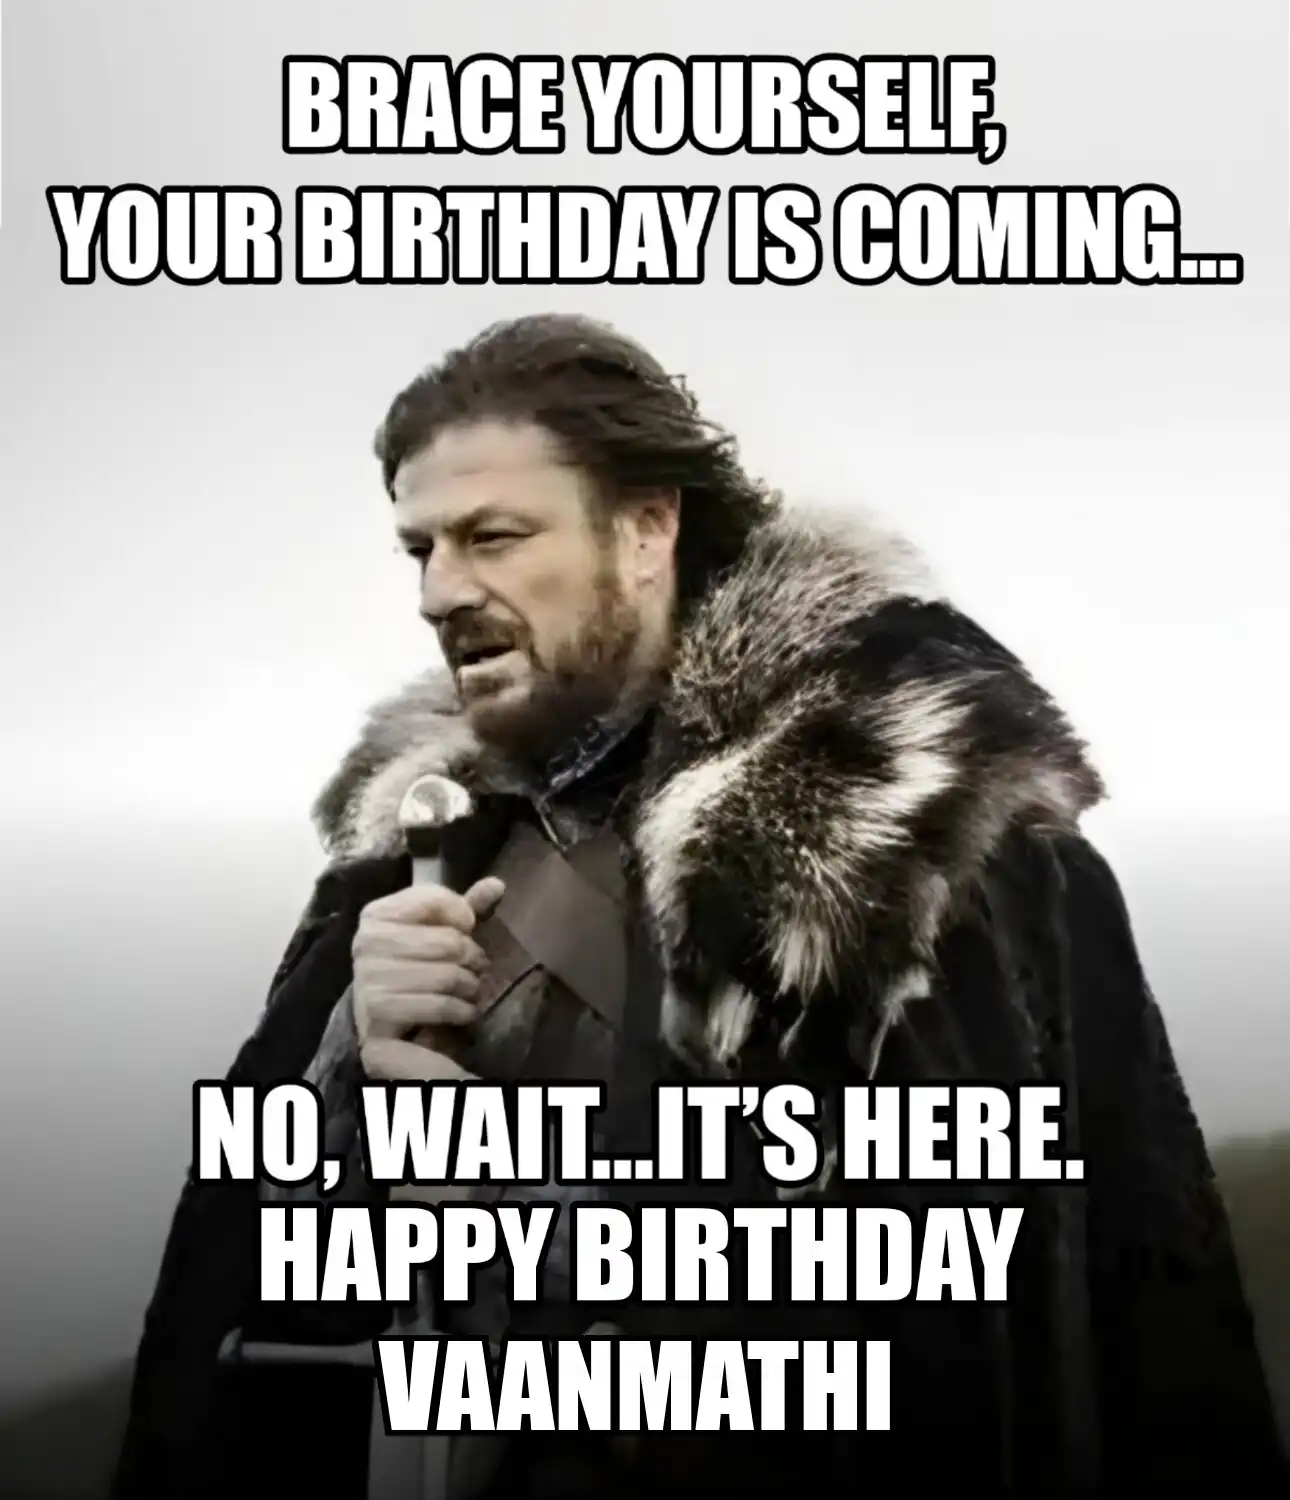 Happy Birthday Vaanmathi Brace Yourself Your Birthday Is Coming Meme